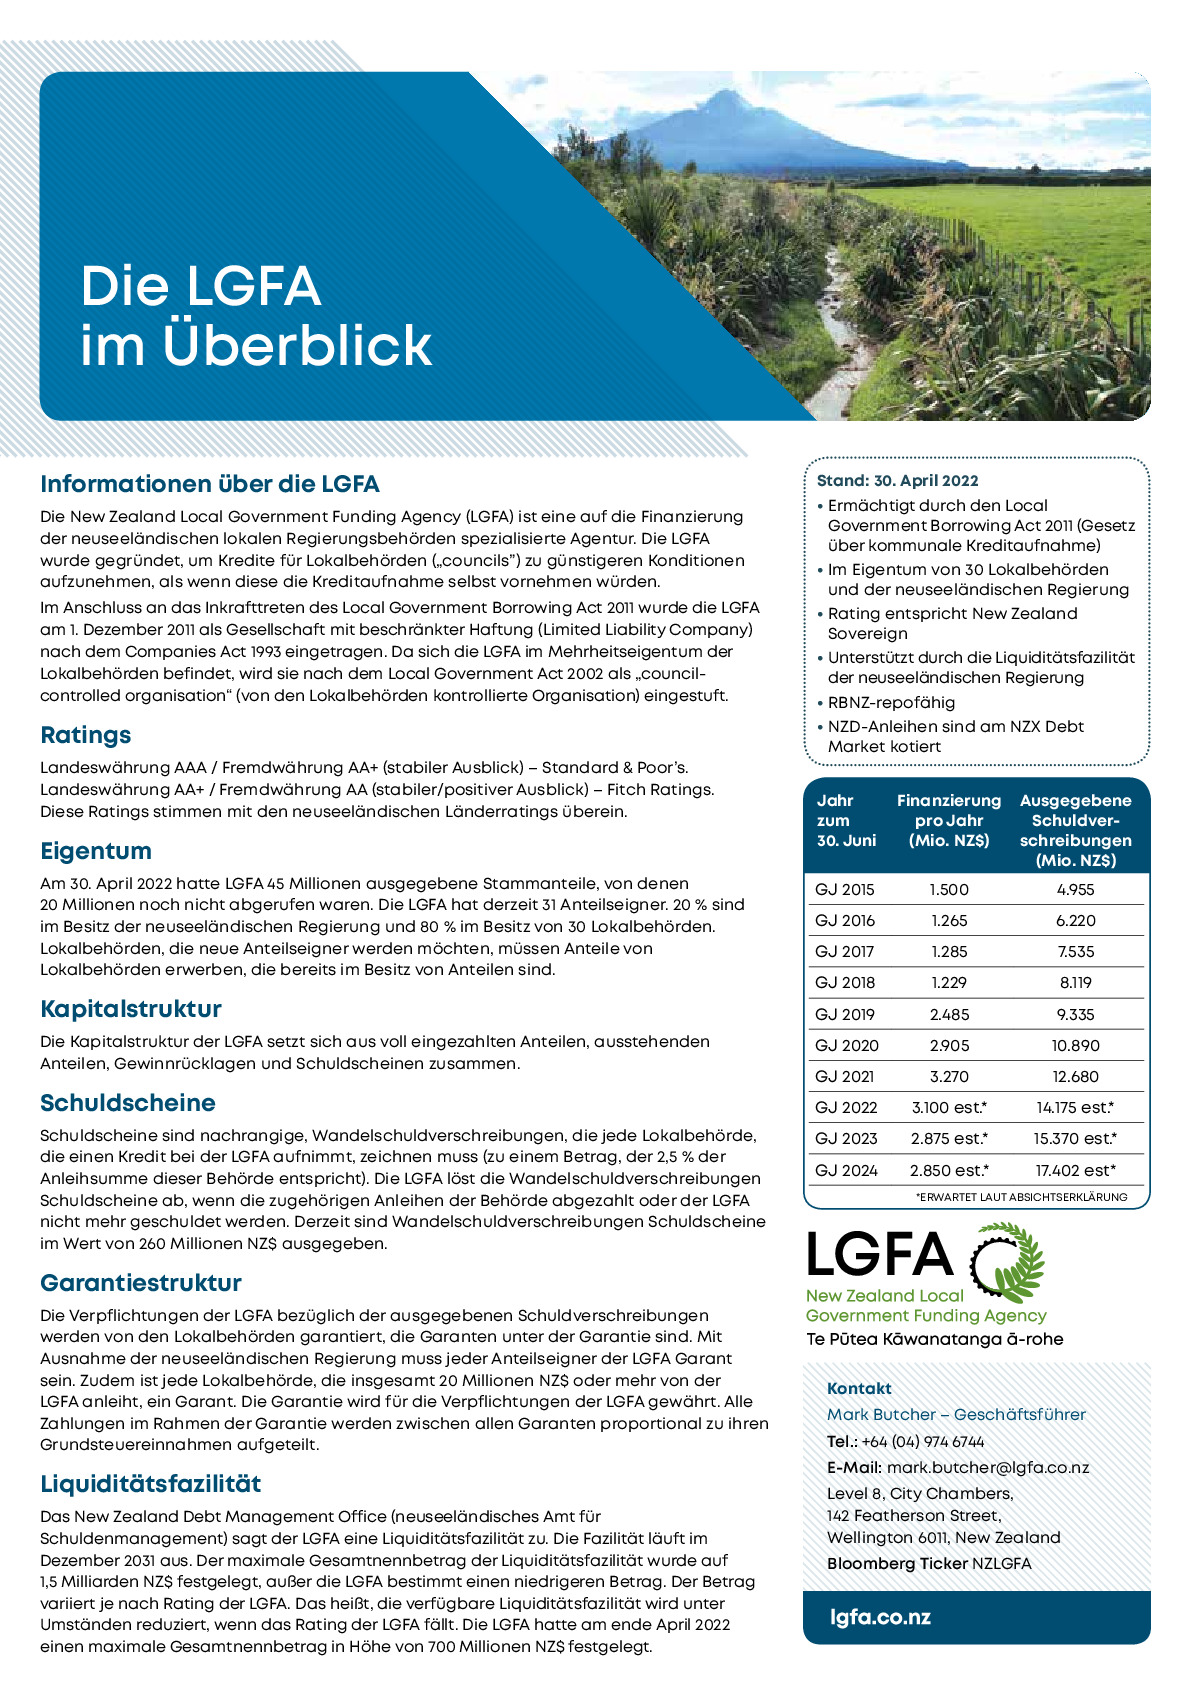 LGFA_Overview_Apr22 - German (web)